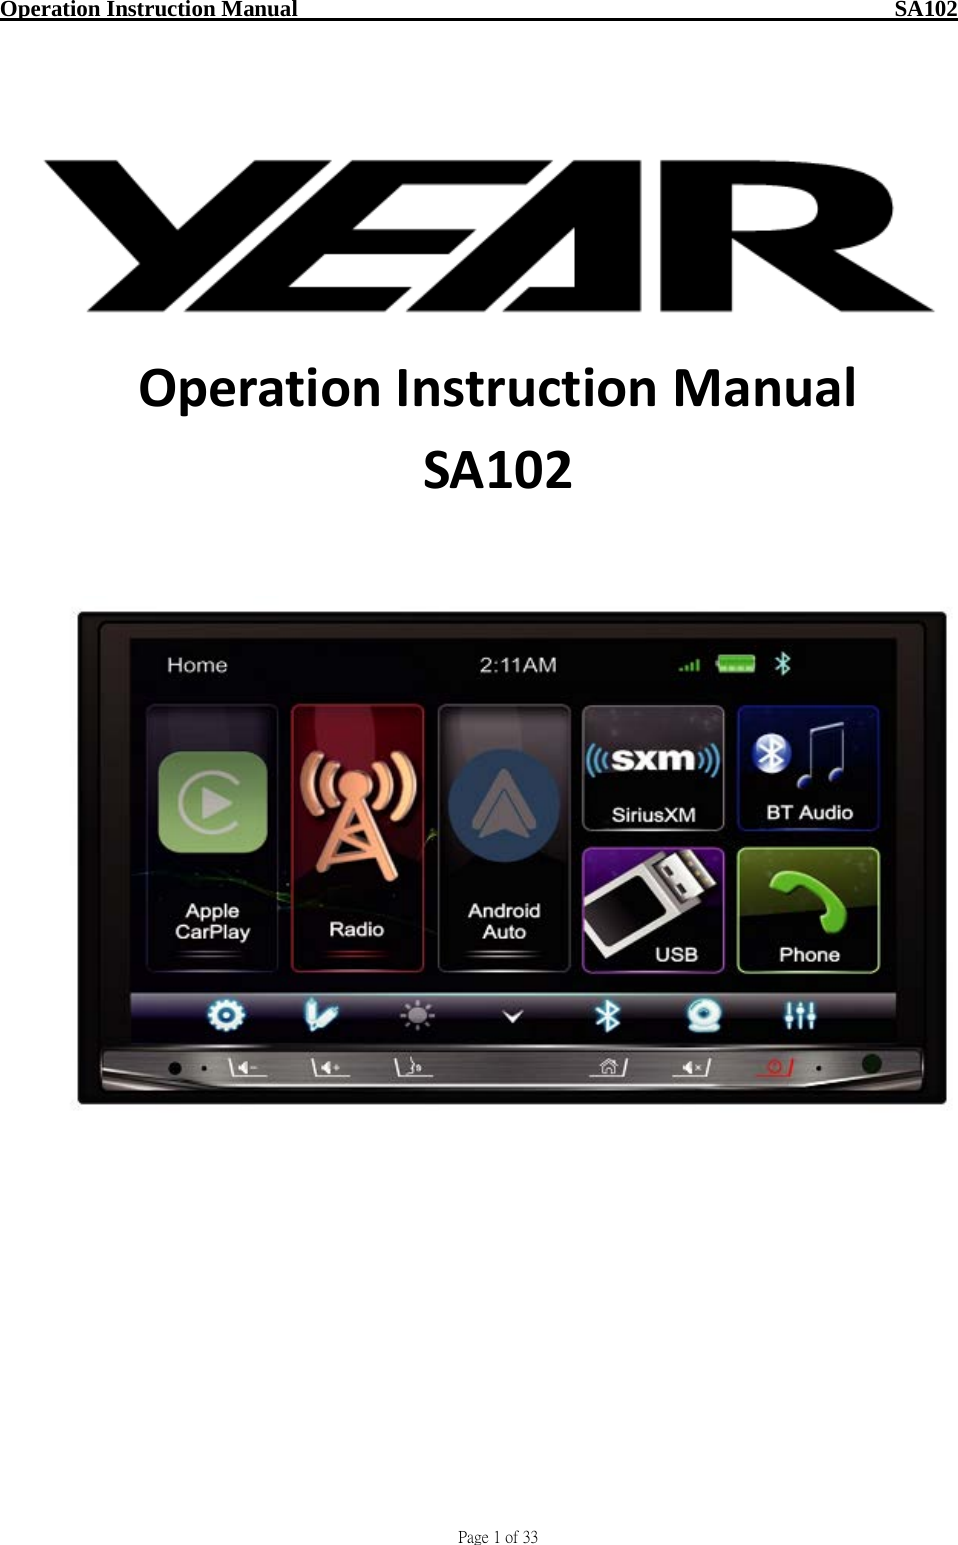                                     Page 1 of 33  Operation Instruction Manual                                                    SA102   Operation Instruction Manual SA102               